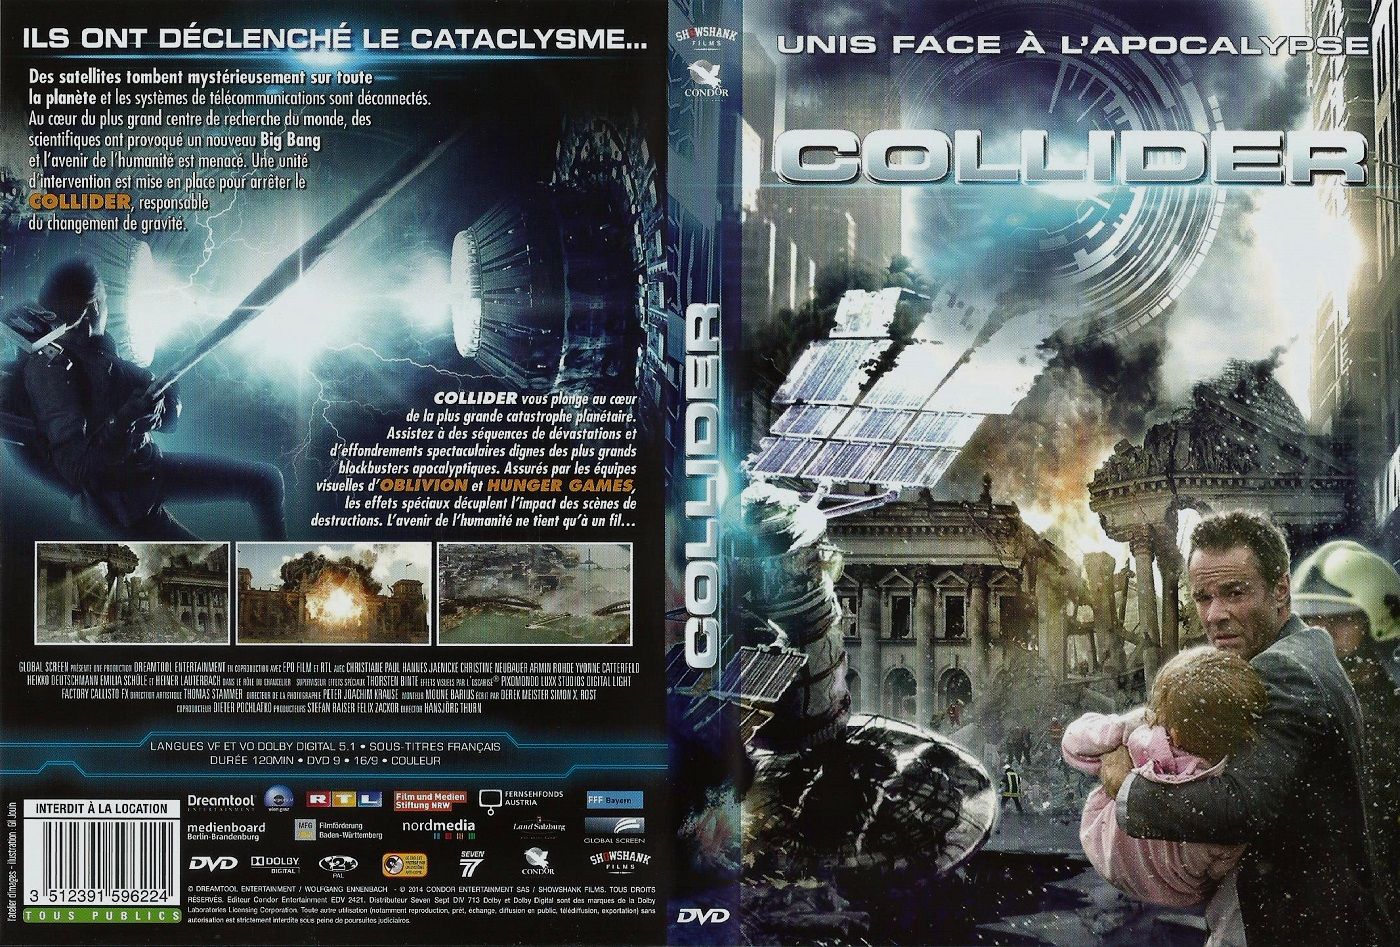 Jaquette DVD Collider